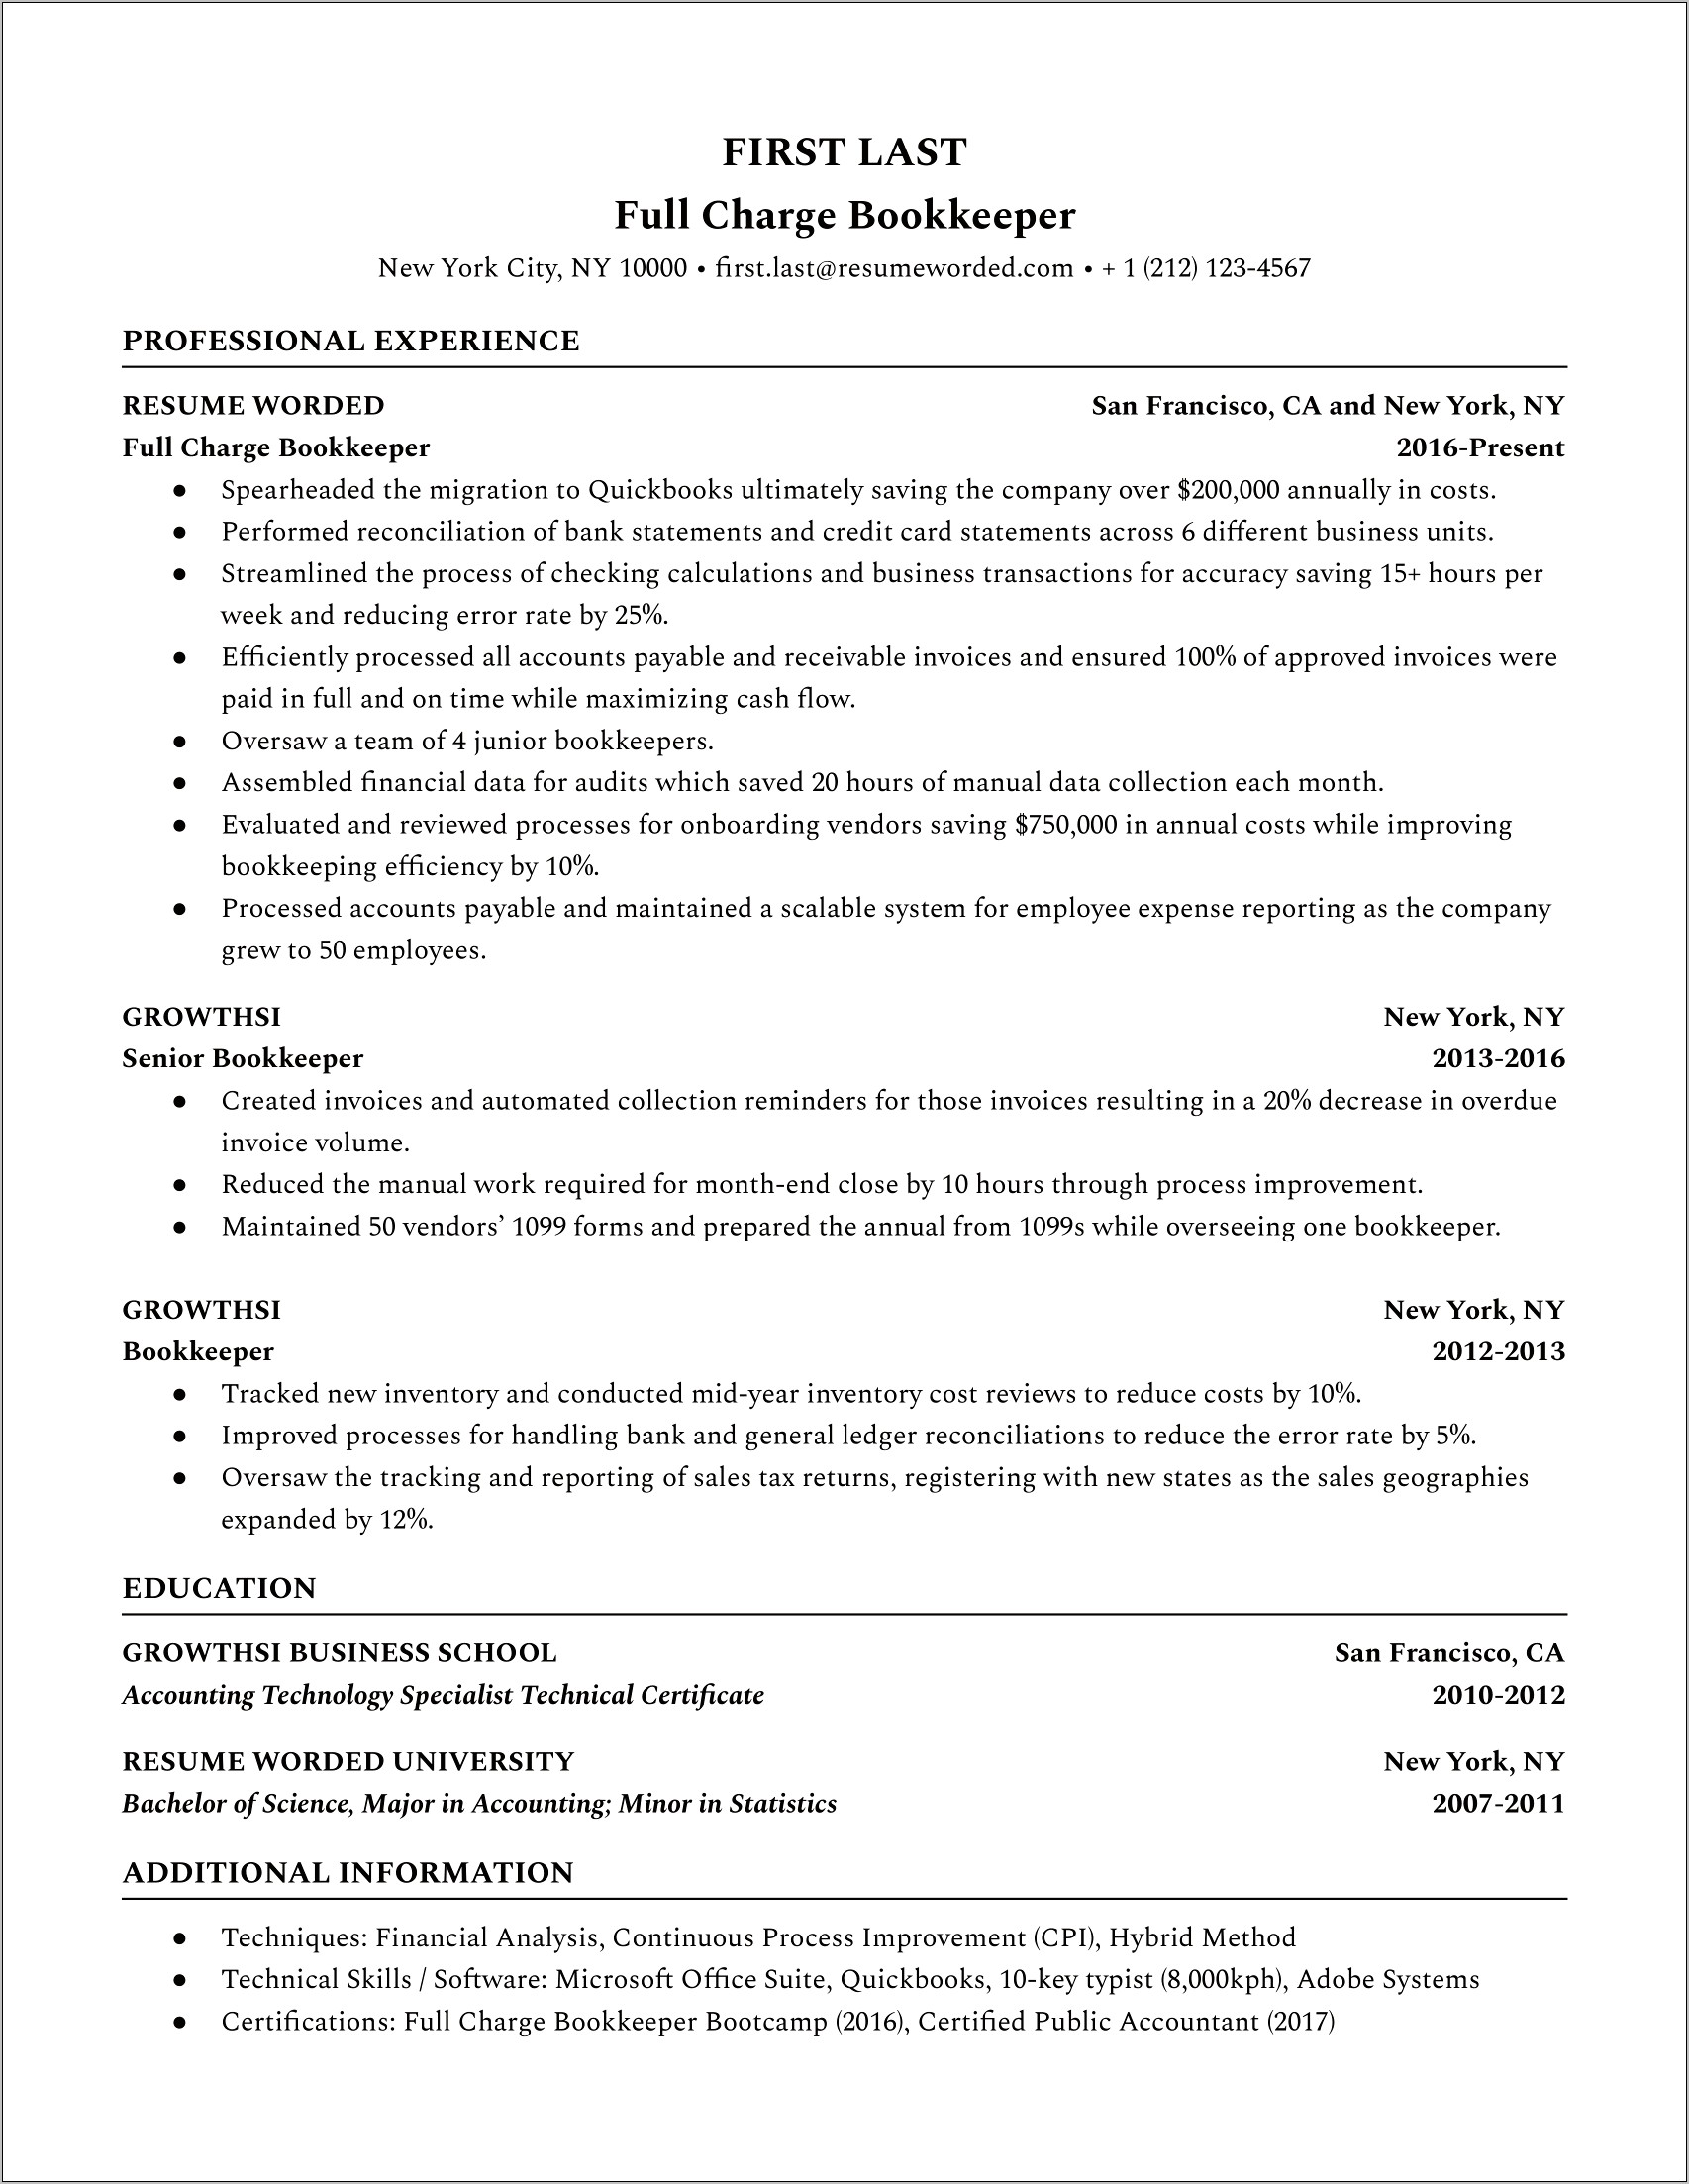 Job Description For Bookkeeper On Resume